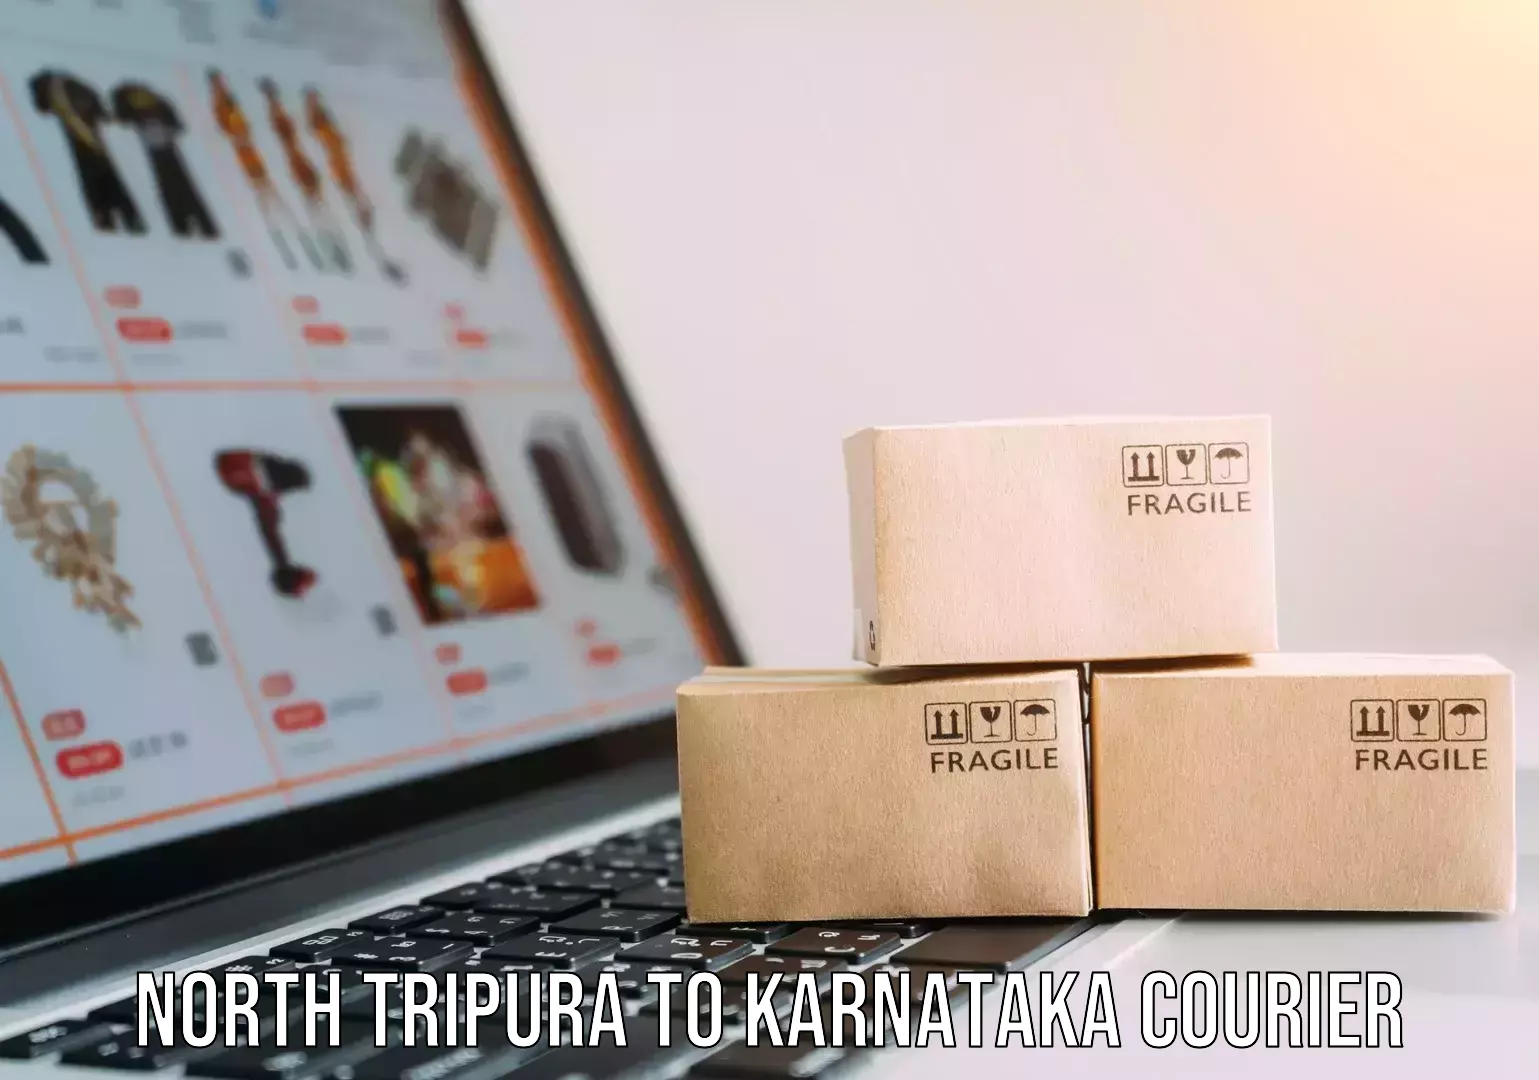 Package tracking North Tripura to Karnataka